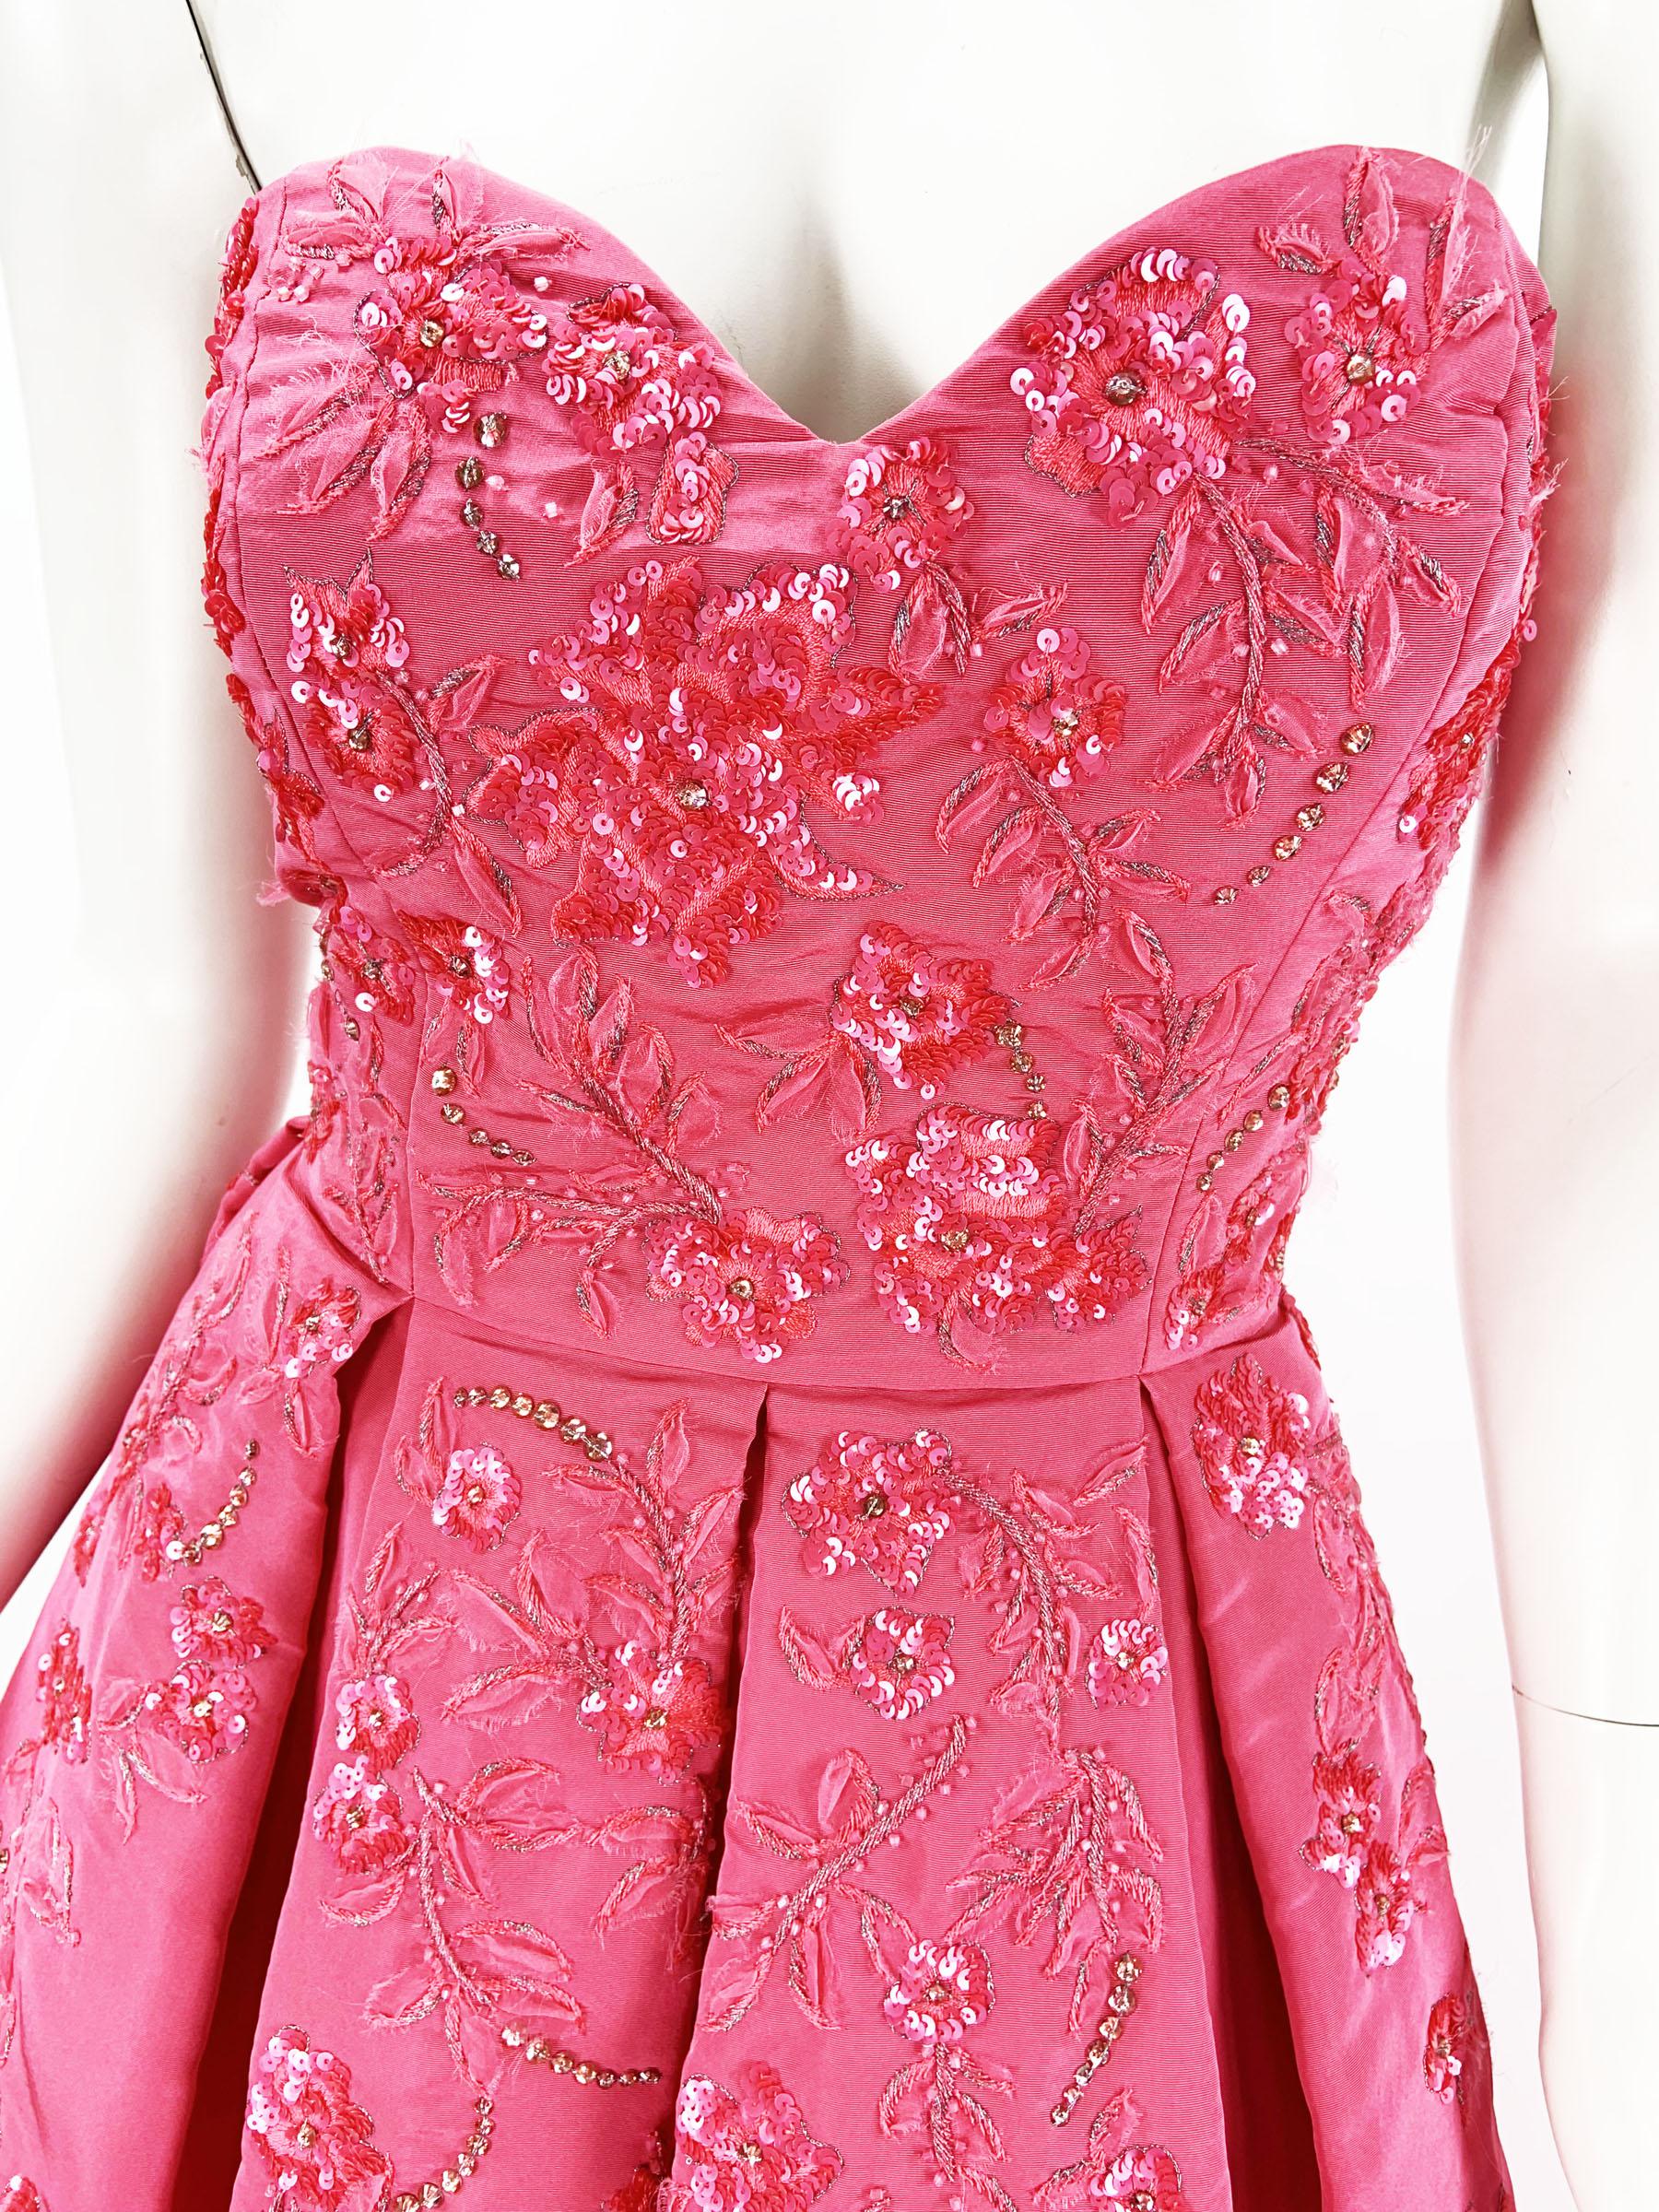 New Oscar De La Renta Silk Taffeta Embellished Pink Dress Gown US 6 For Sale 3